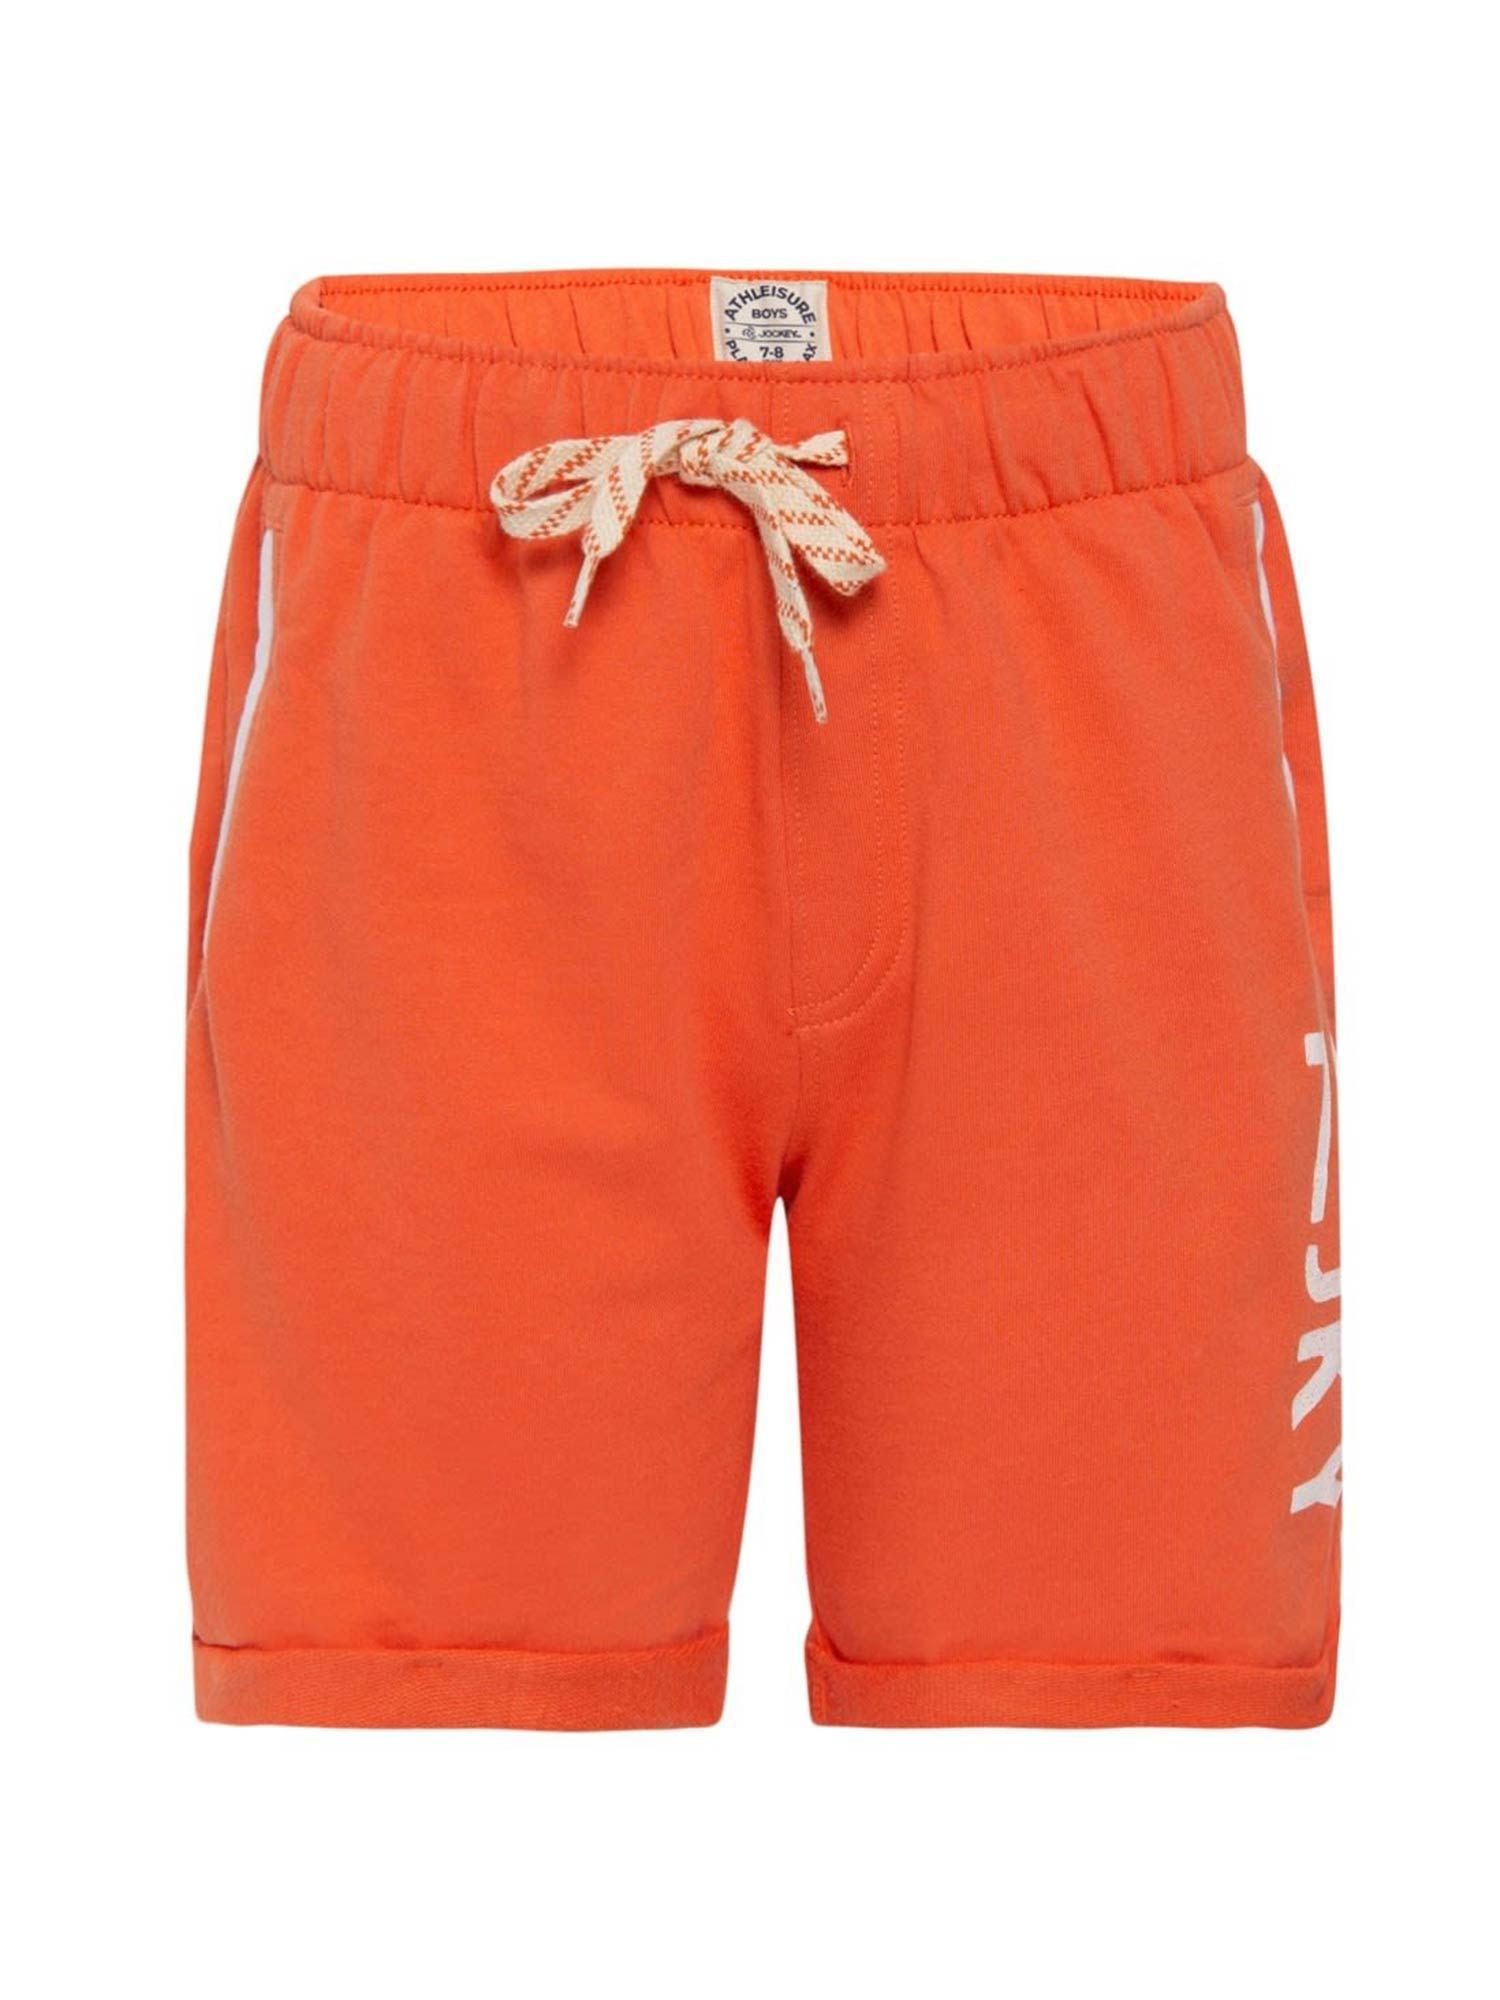 orange-solid-shorts